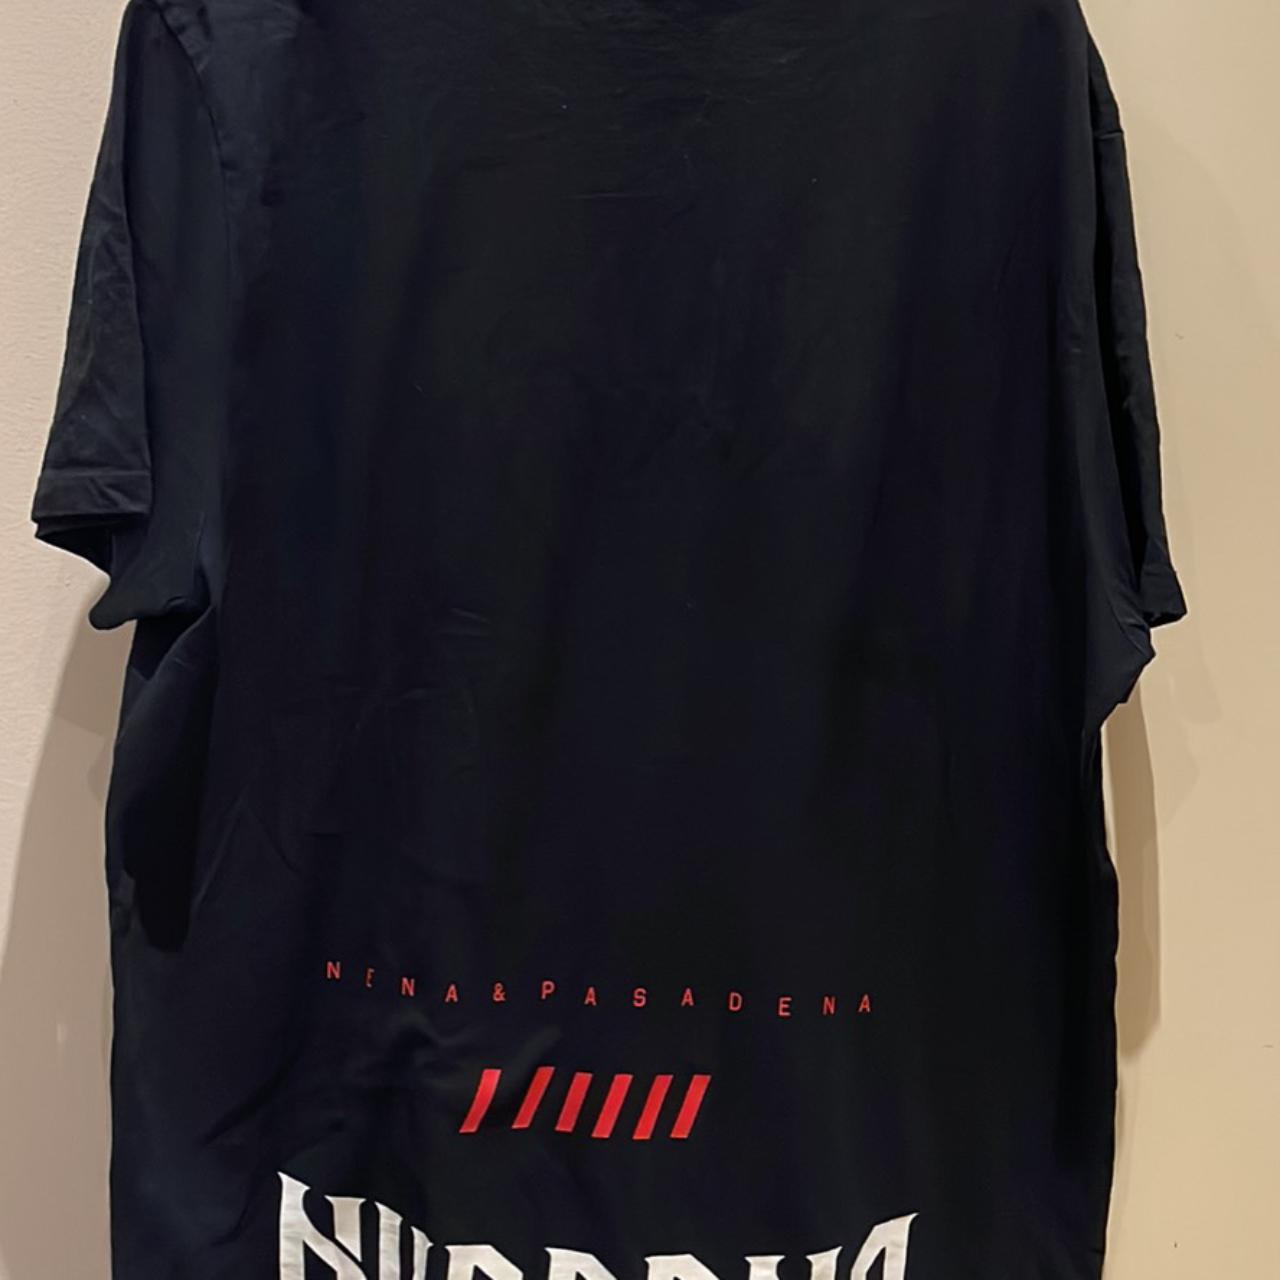 Nena & Pasadena NXP Distressed Look T-shirt Size... - Depop